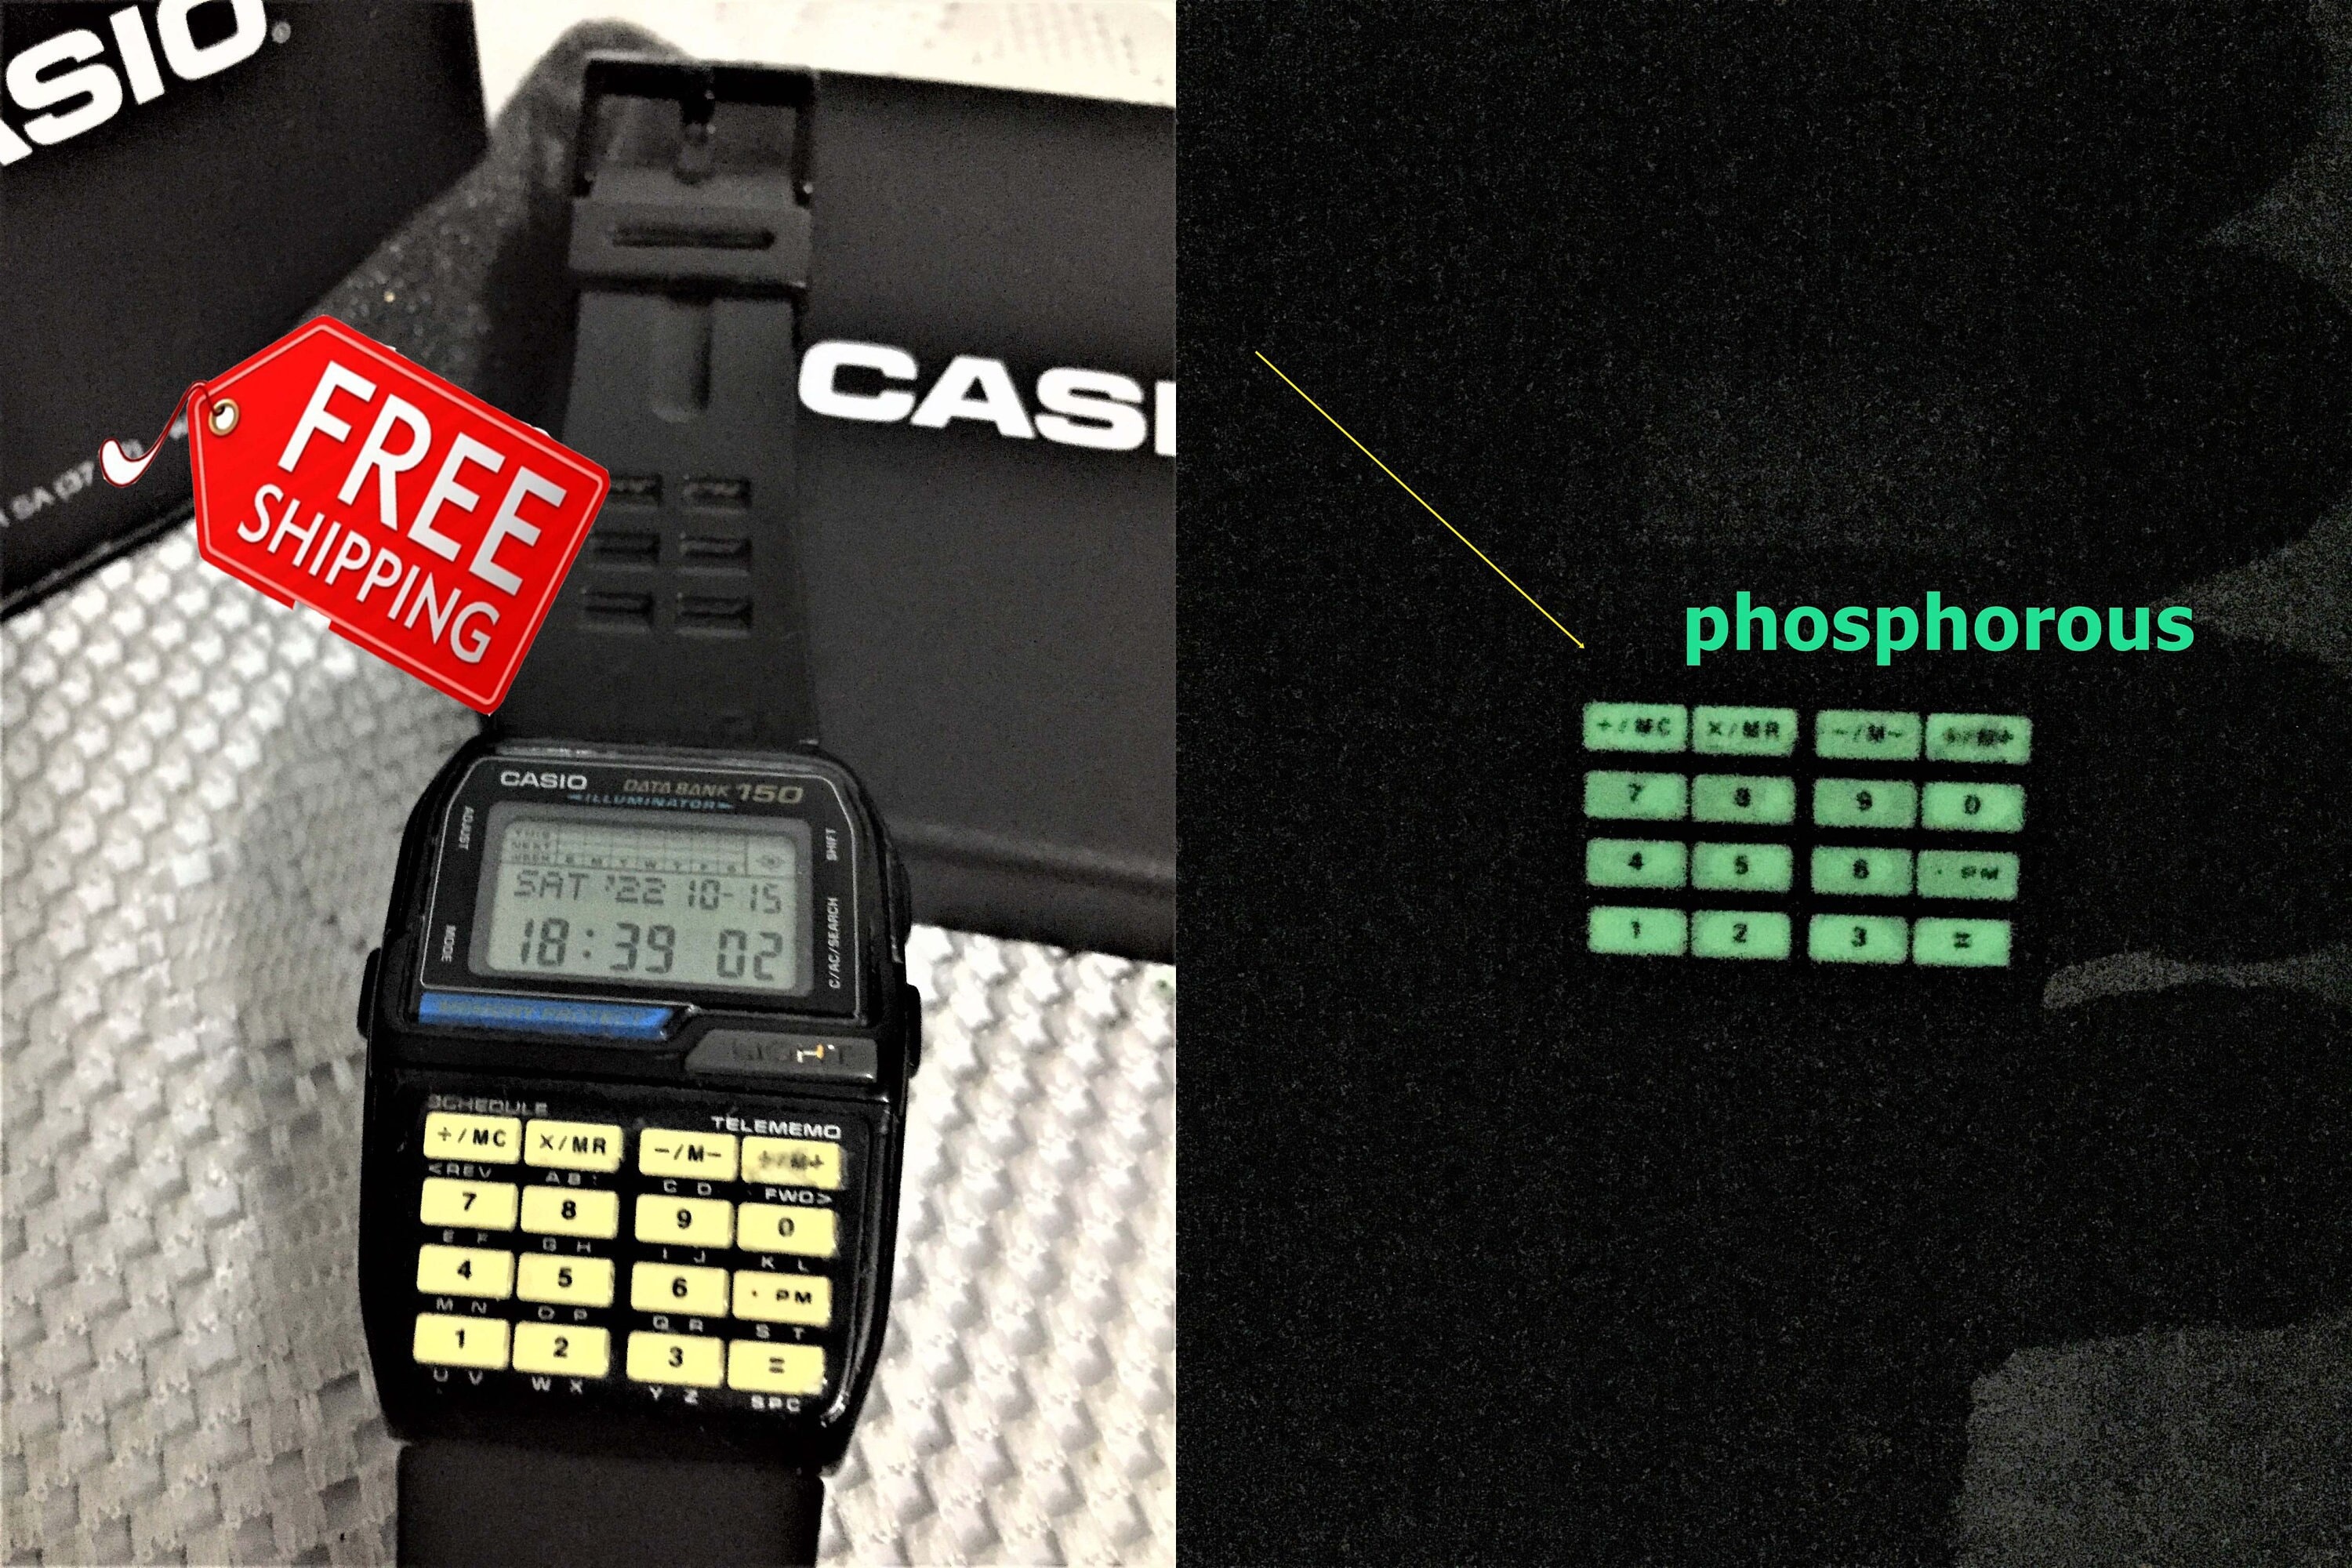 alien ly Gym Casio Dbc-150 Data Bank 150 Phosphorous Keyboard / Module - Etsy